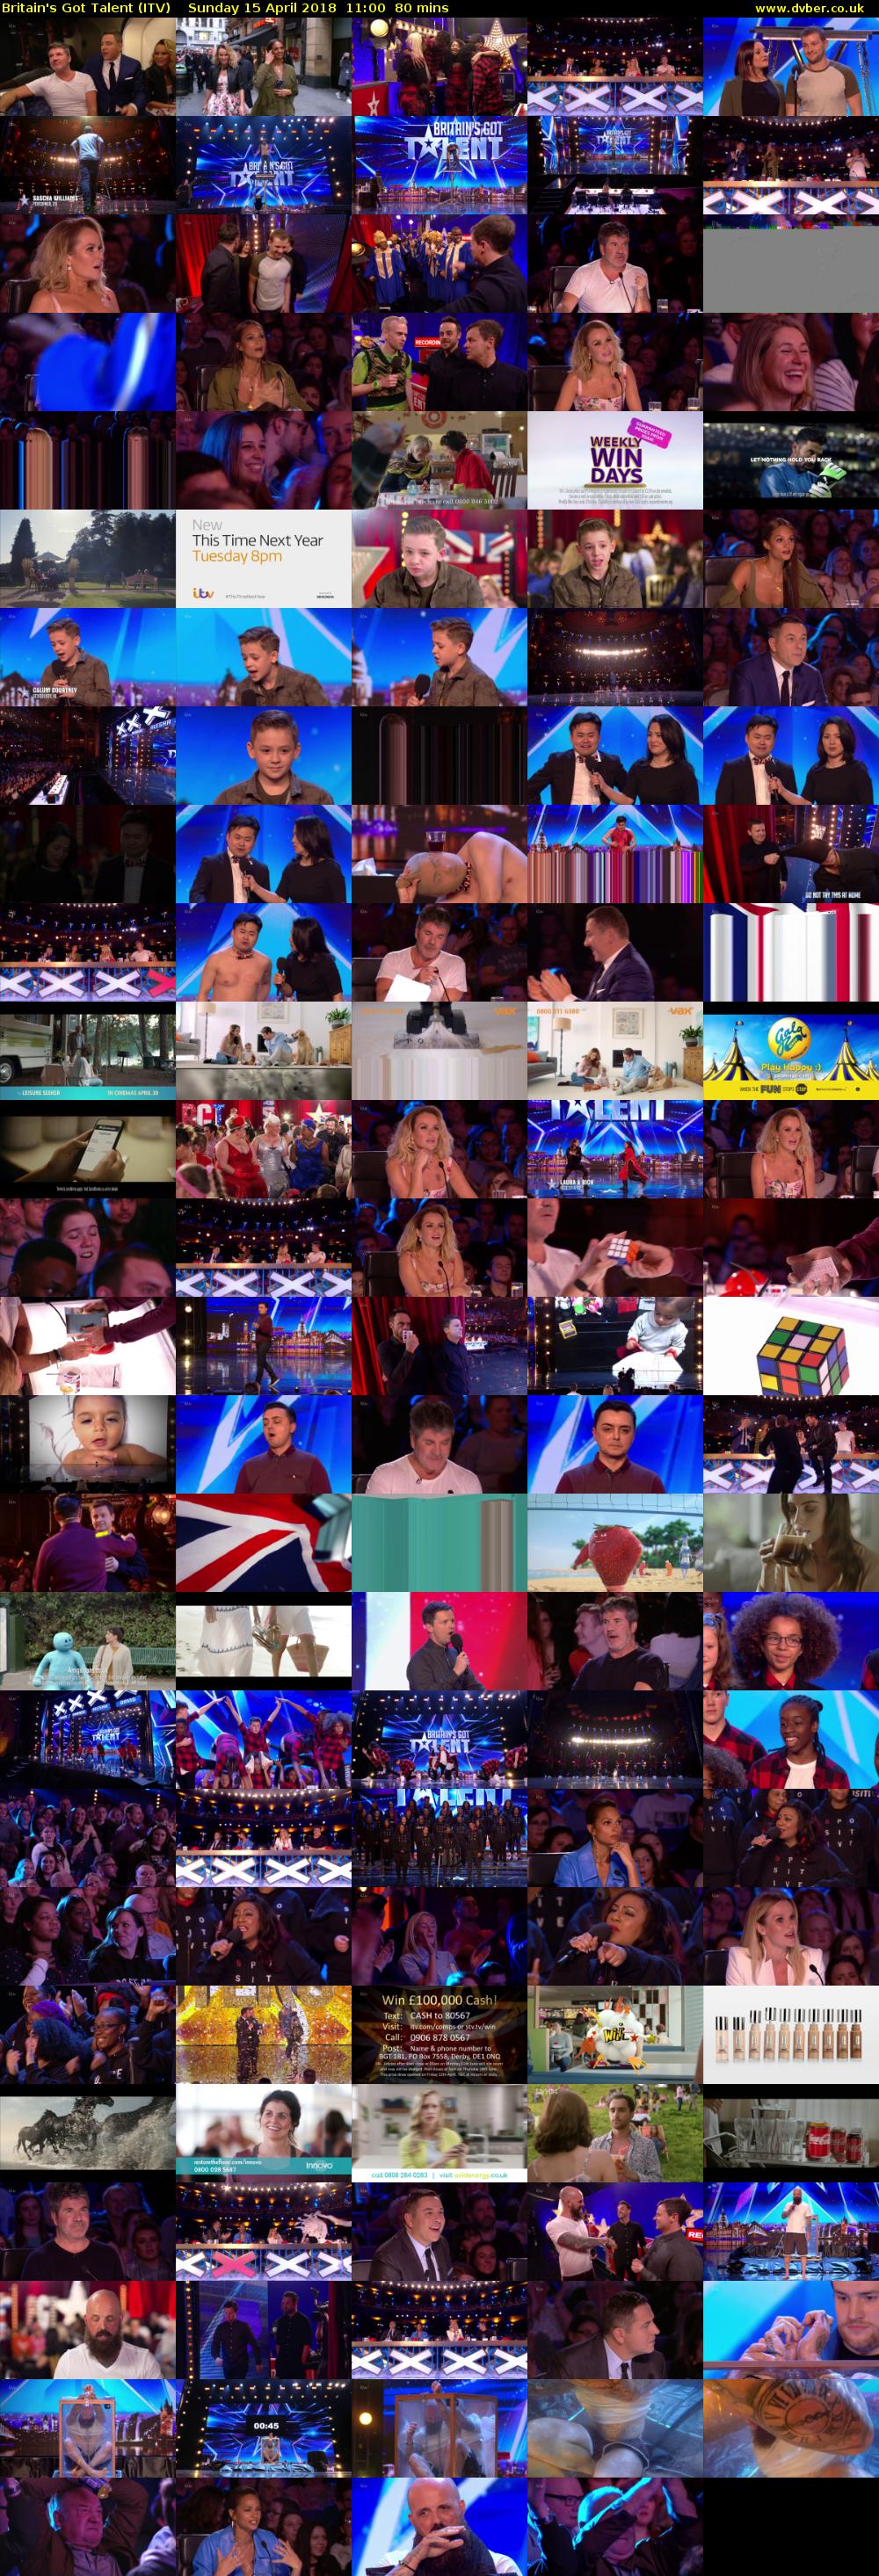 Britain's Got Talent (ITV) Sunday 15 April 2018 11:00 - 12:20